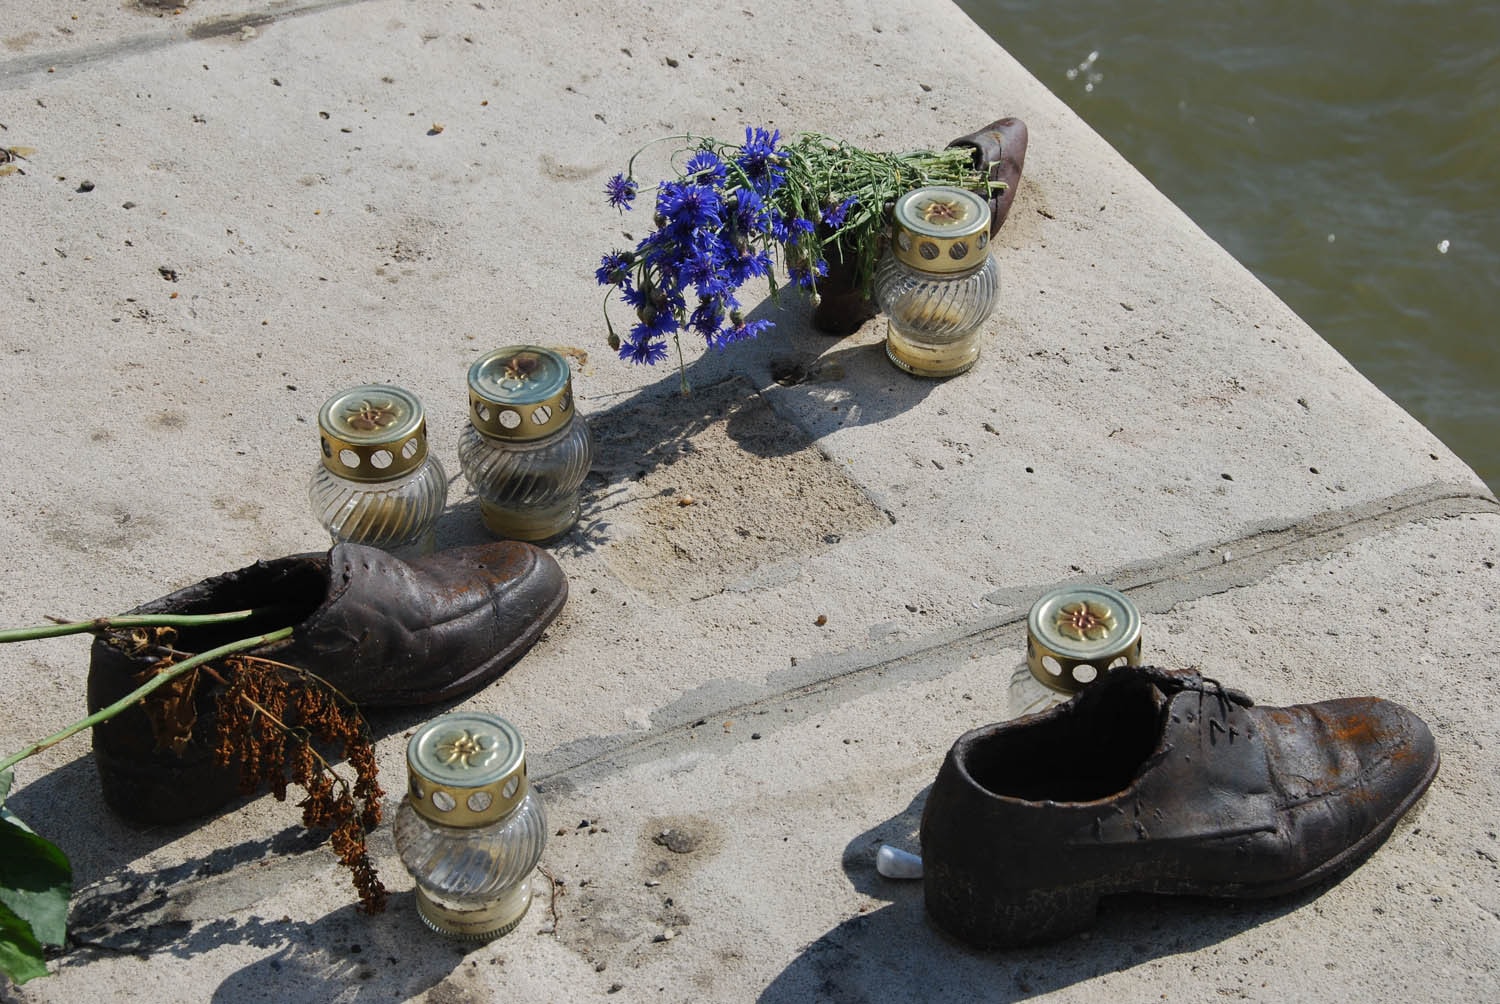 Chaussures, fleurs et bougies en hommage